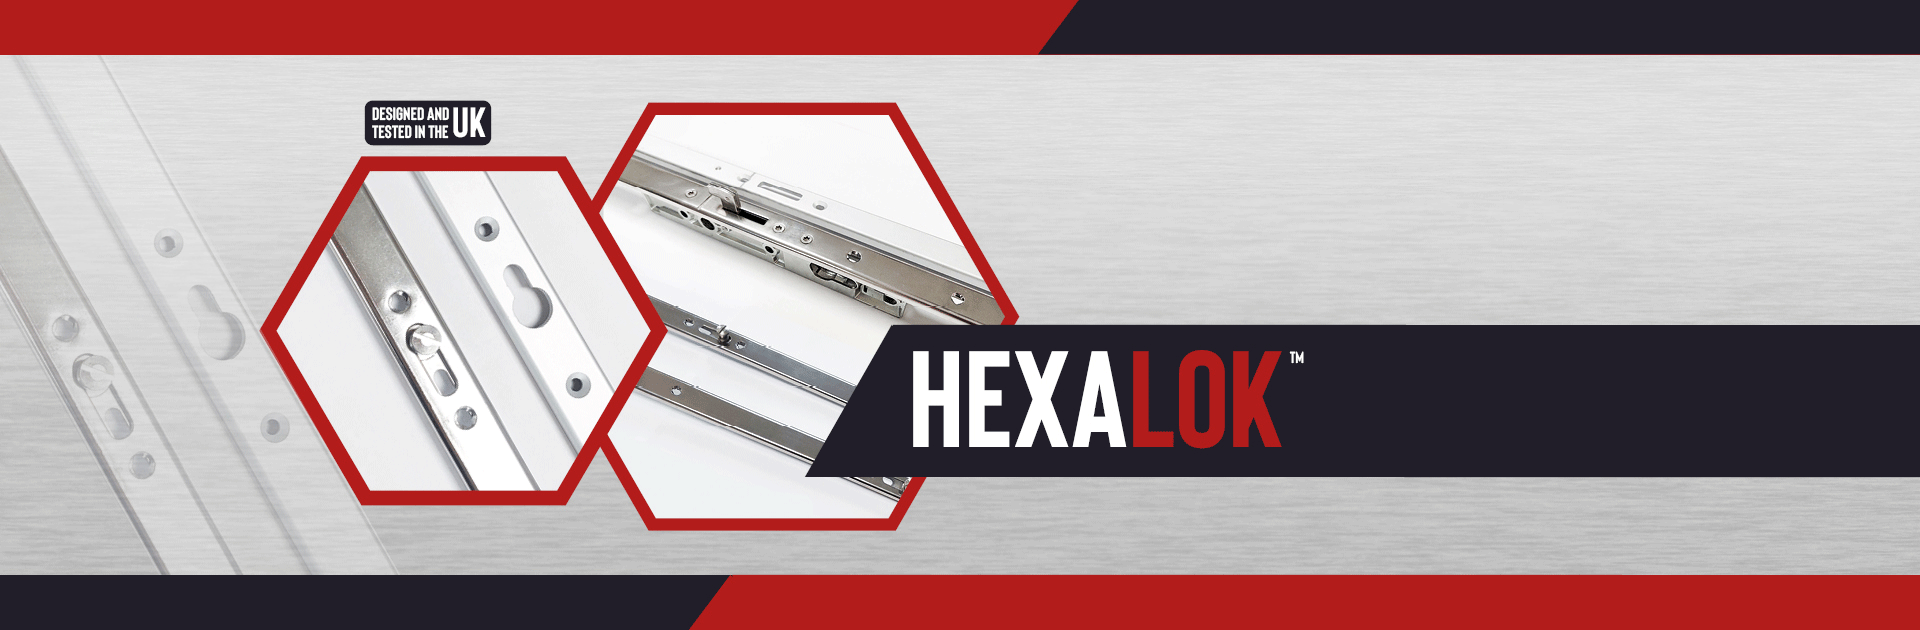 Hexalok - High security multi point lock for sliding doors